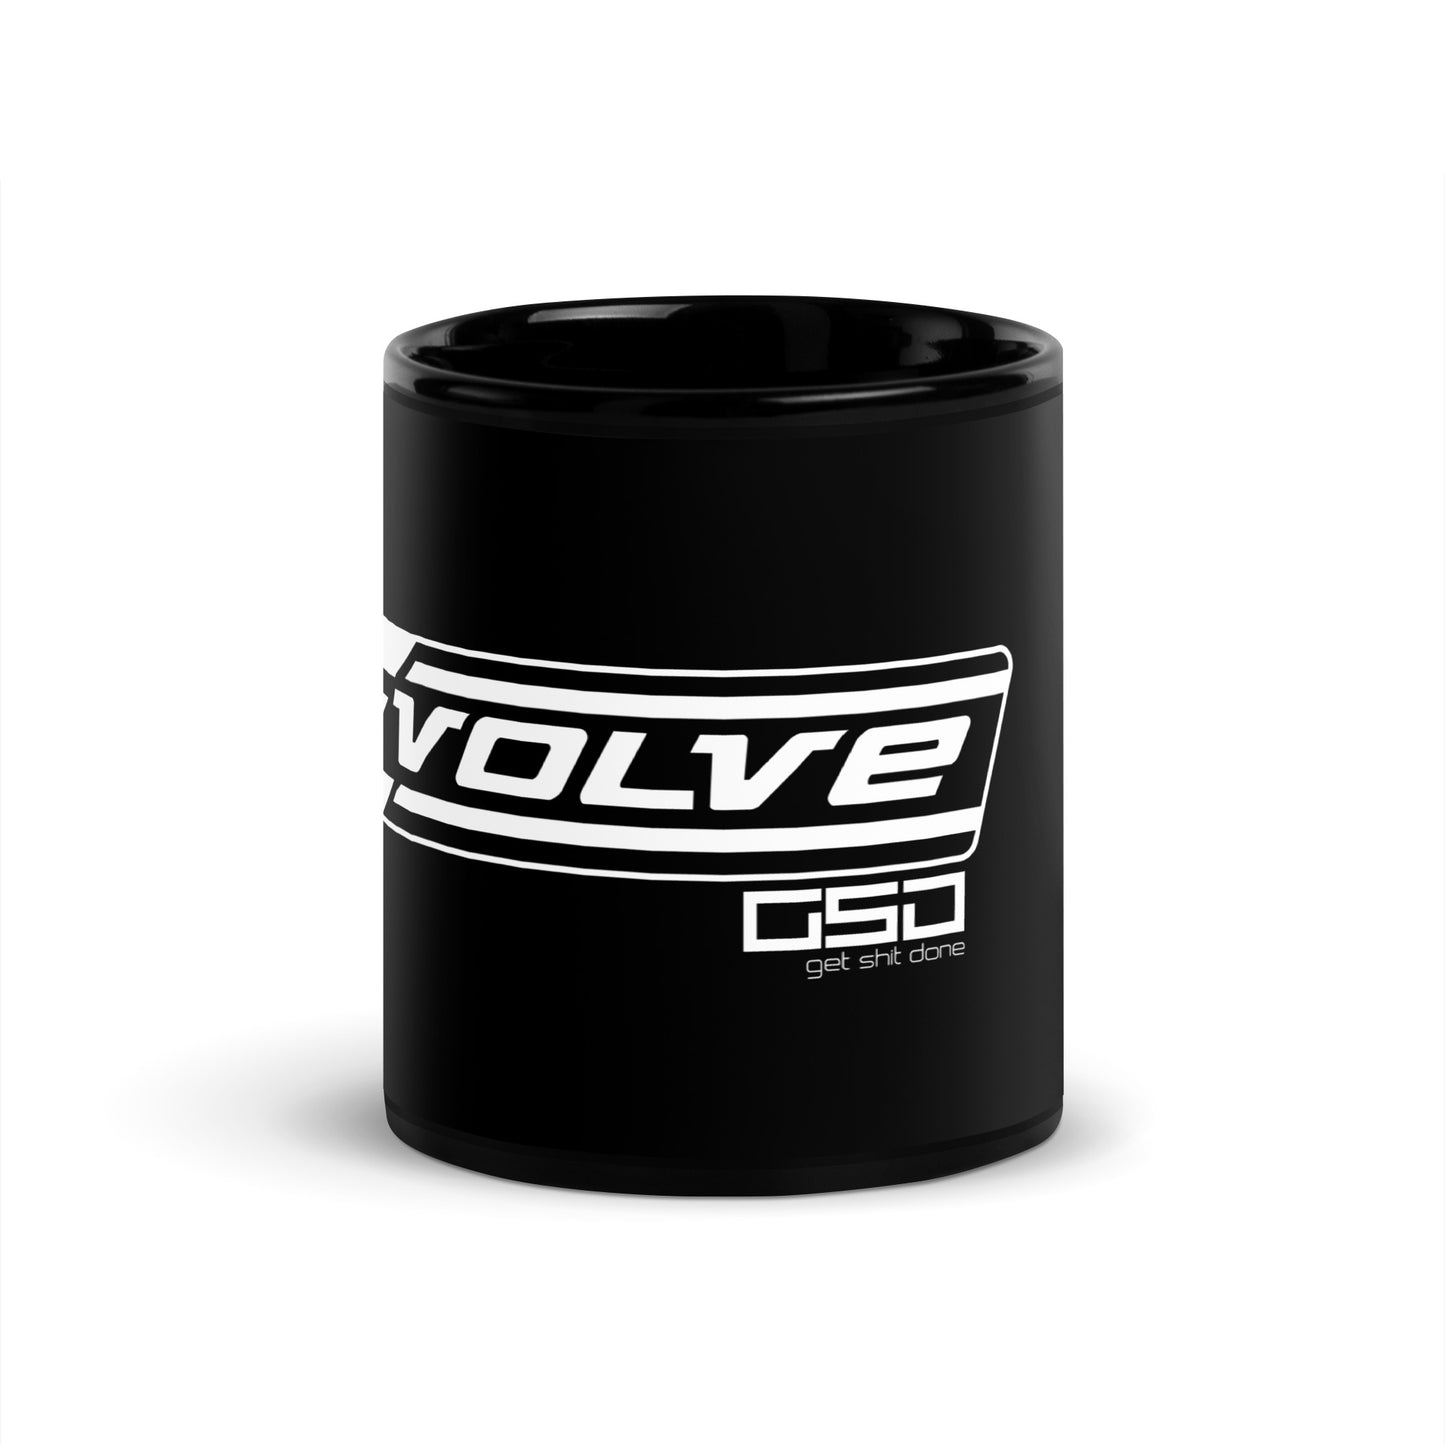 Evolve-Black Glossy Mug